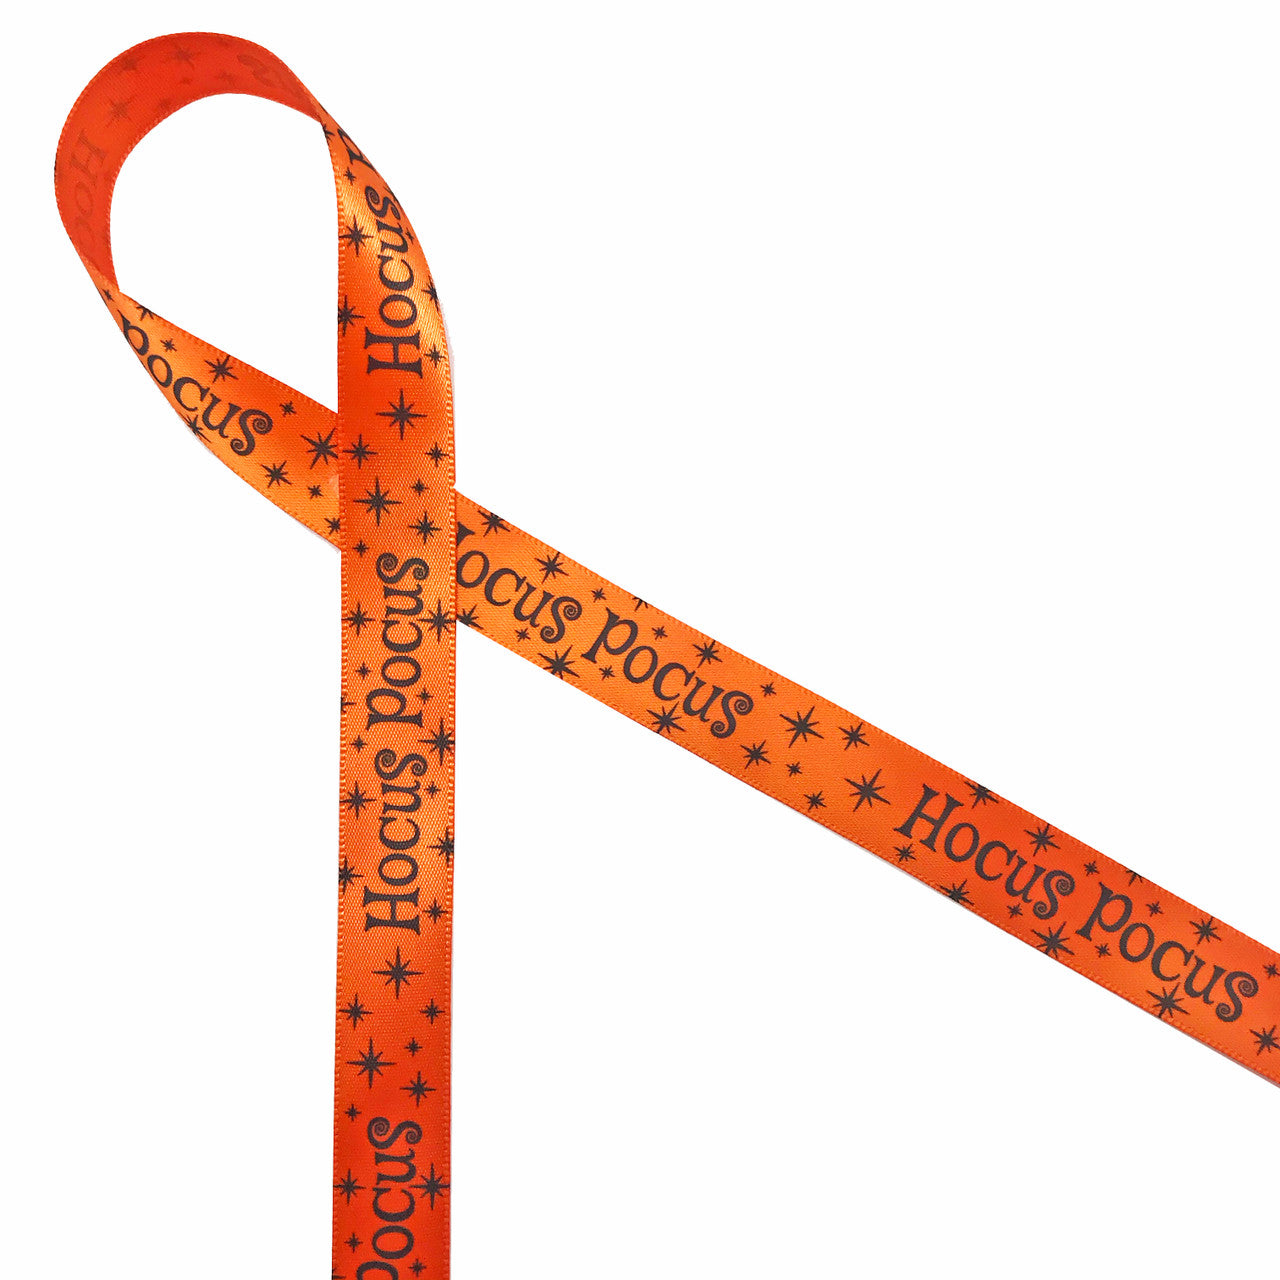 Hocus Pocus ribbon with black ink printed on 5/8" tangerine single face satin